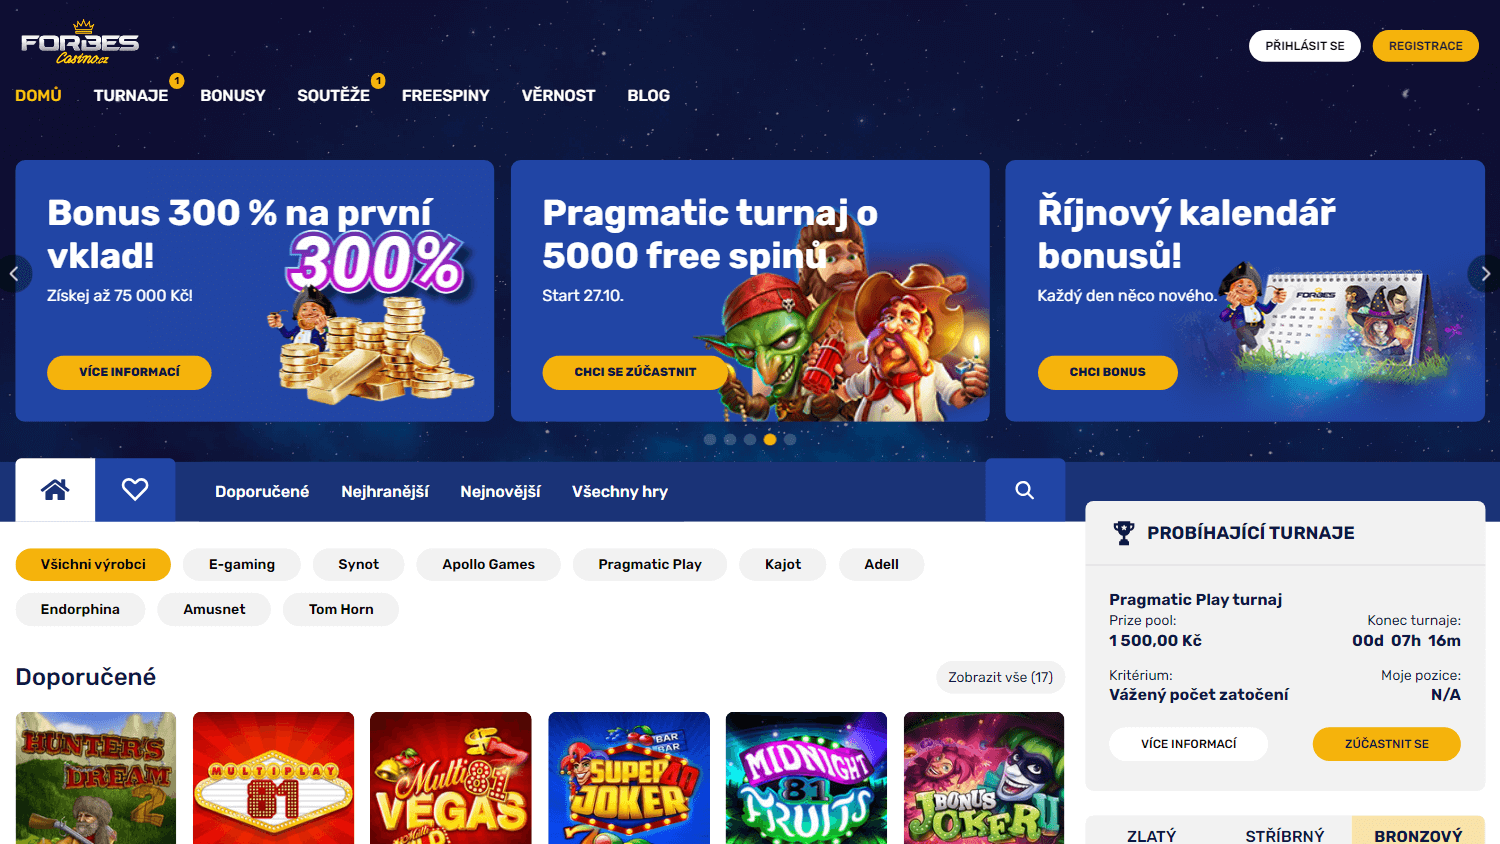 forbes_casino_homepage_desktop